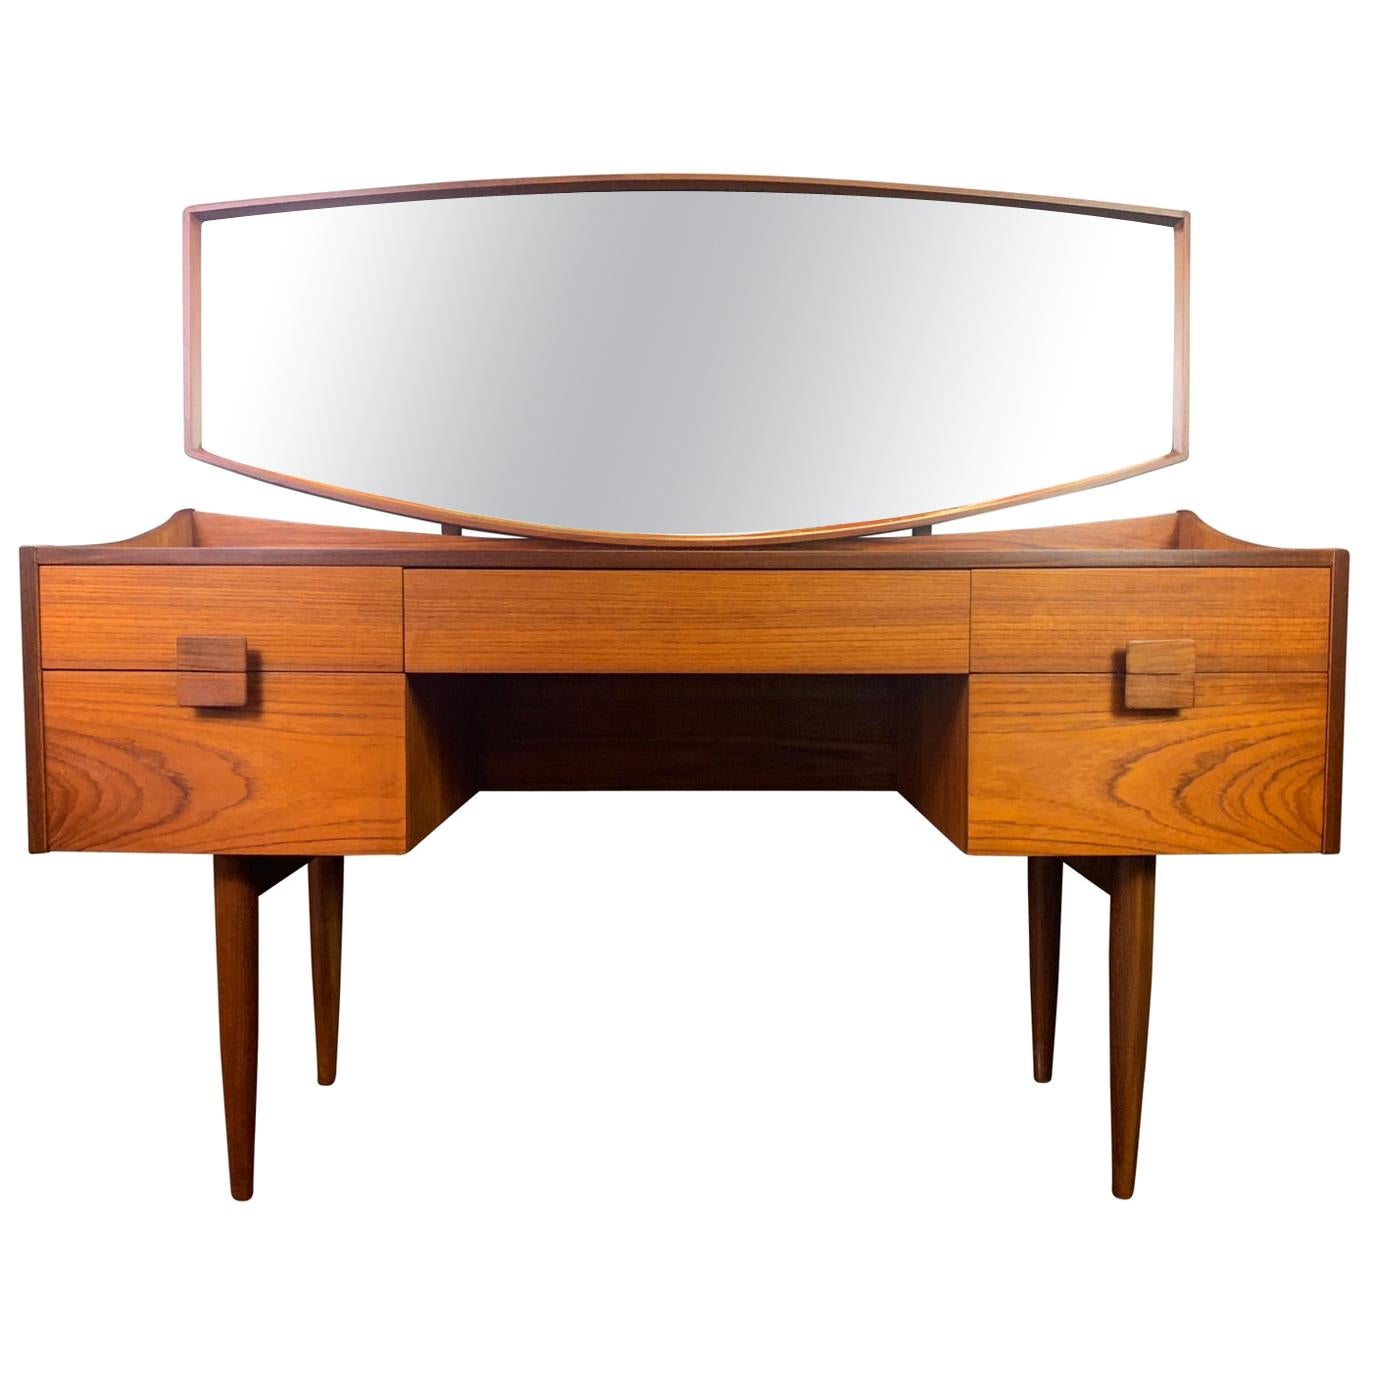 Vintage British Midcentury Teak Vanity and Mirror by Kofod Larsen for G Plan